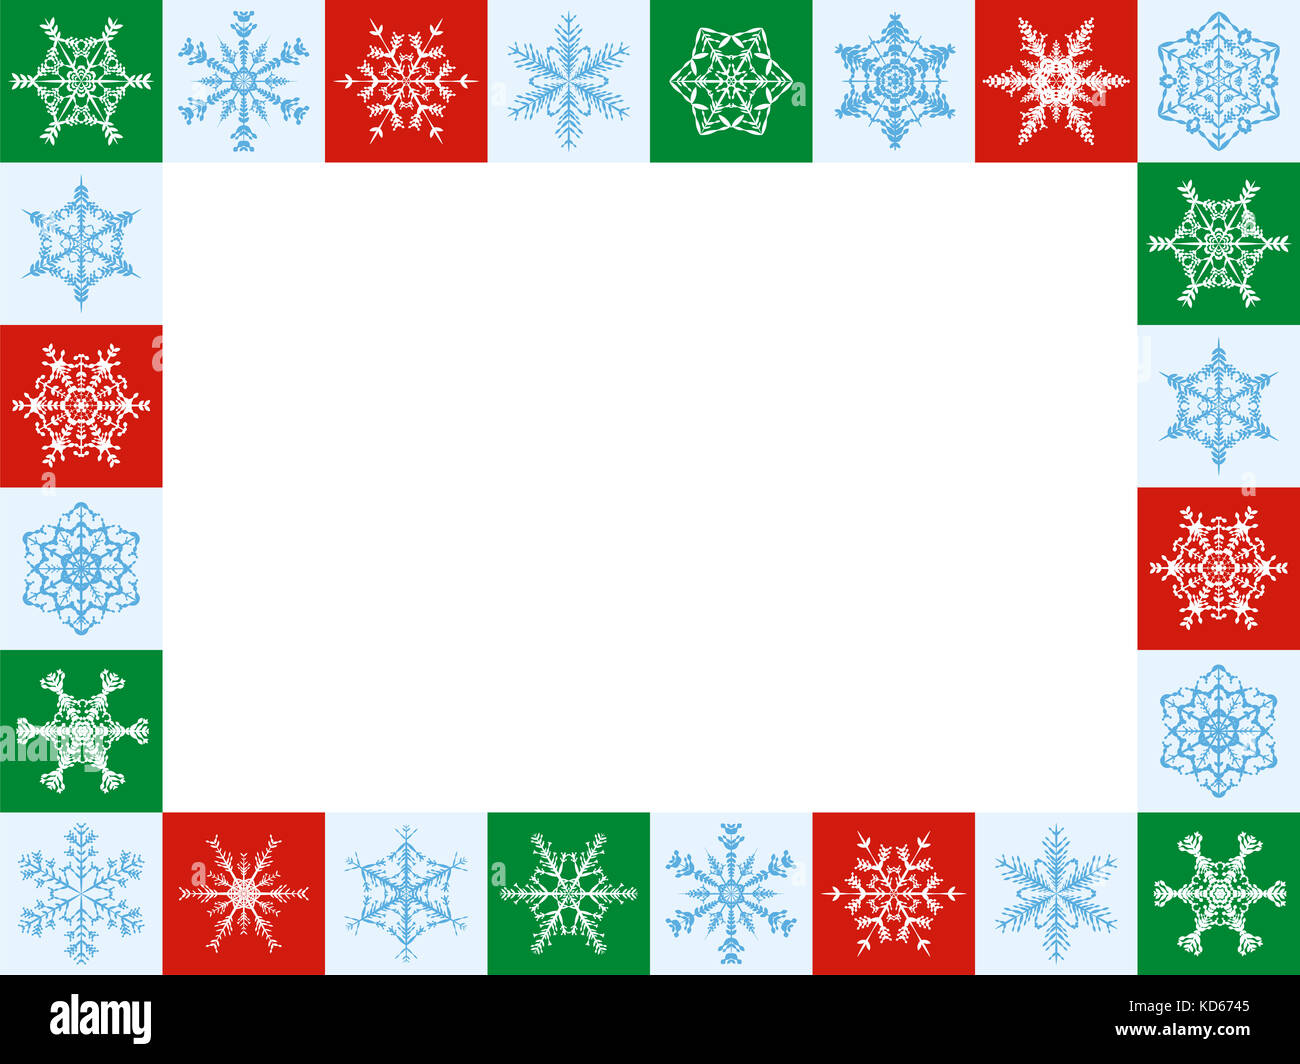 Snowflakes christmas frame, horizontal format - twenty-four artful red, green and white tiles - illustration with white blank center. Stock Photo